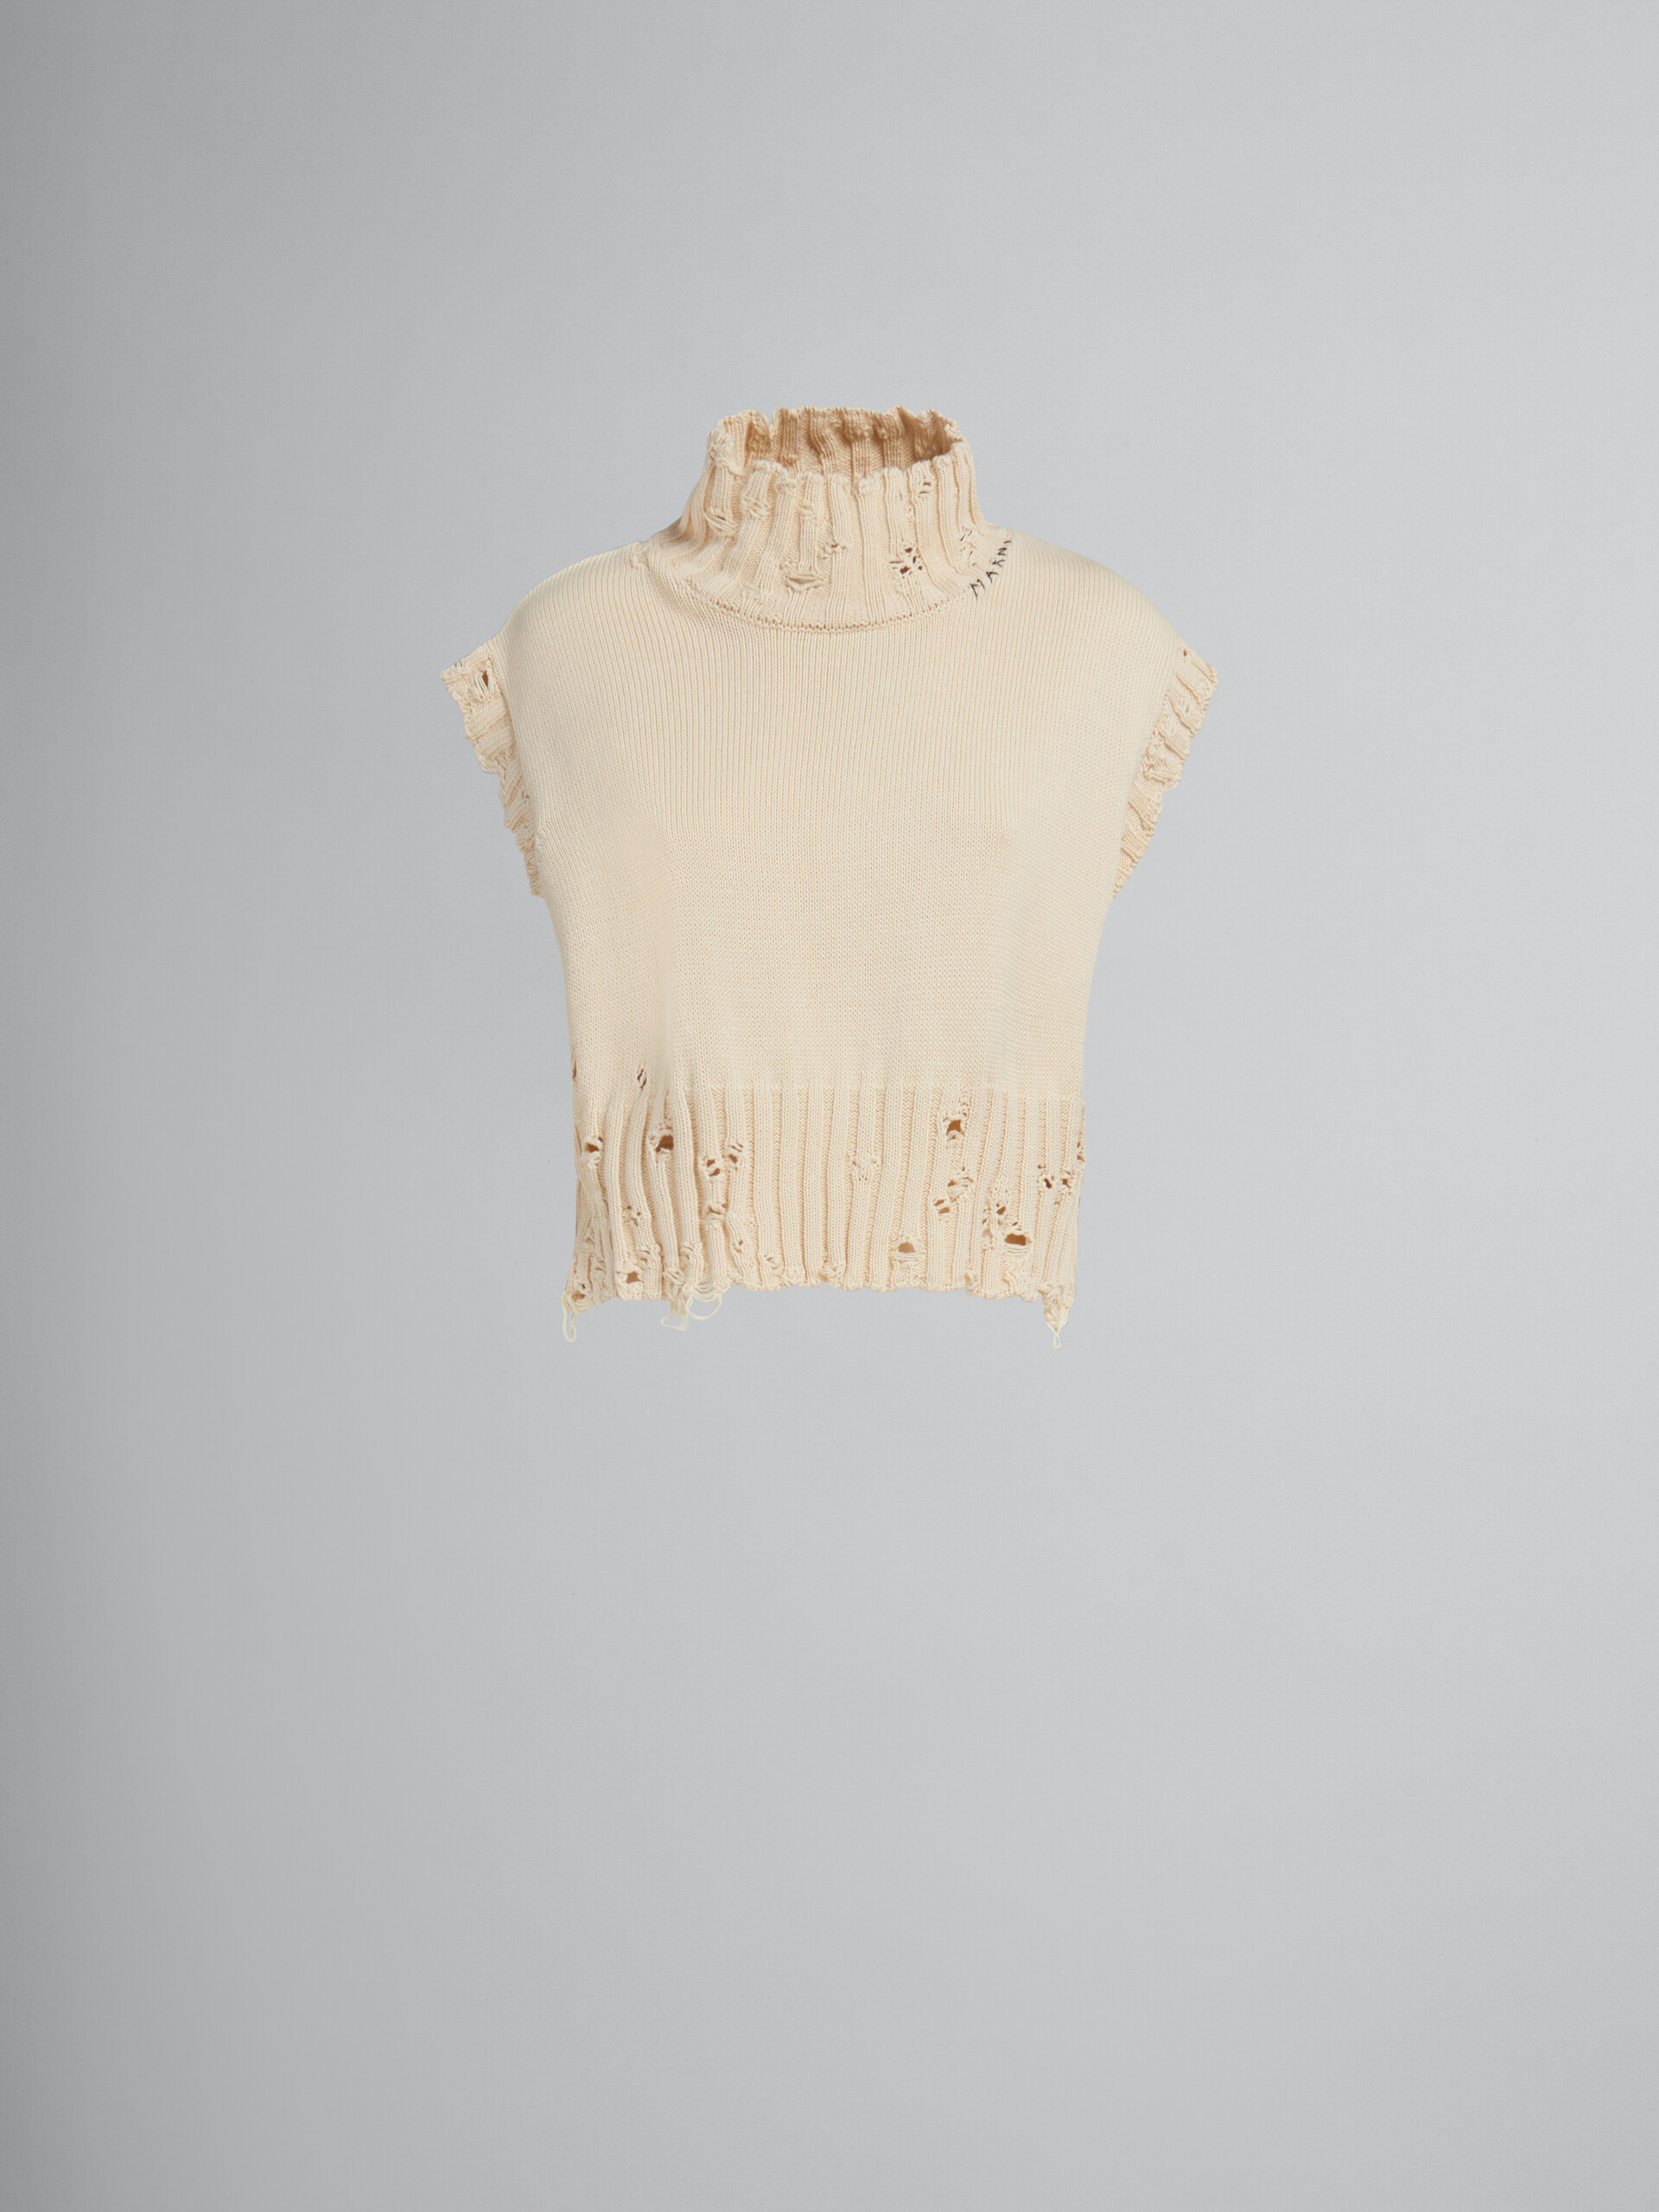 Black cotton cropped vest - Pullovers - Image 1